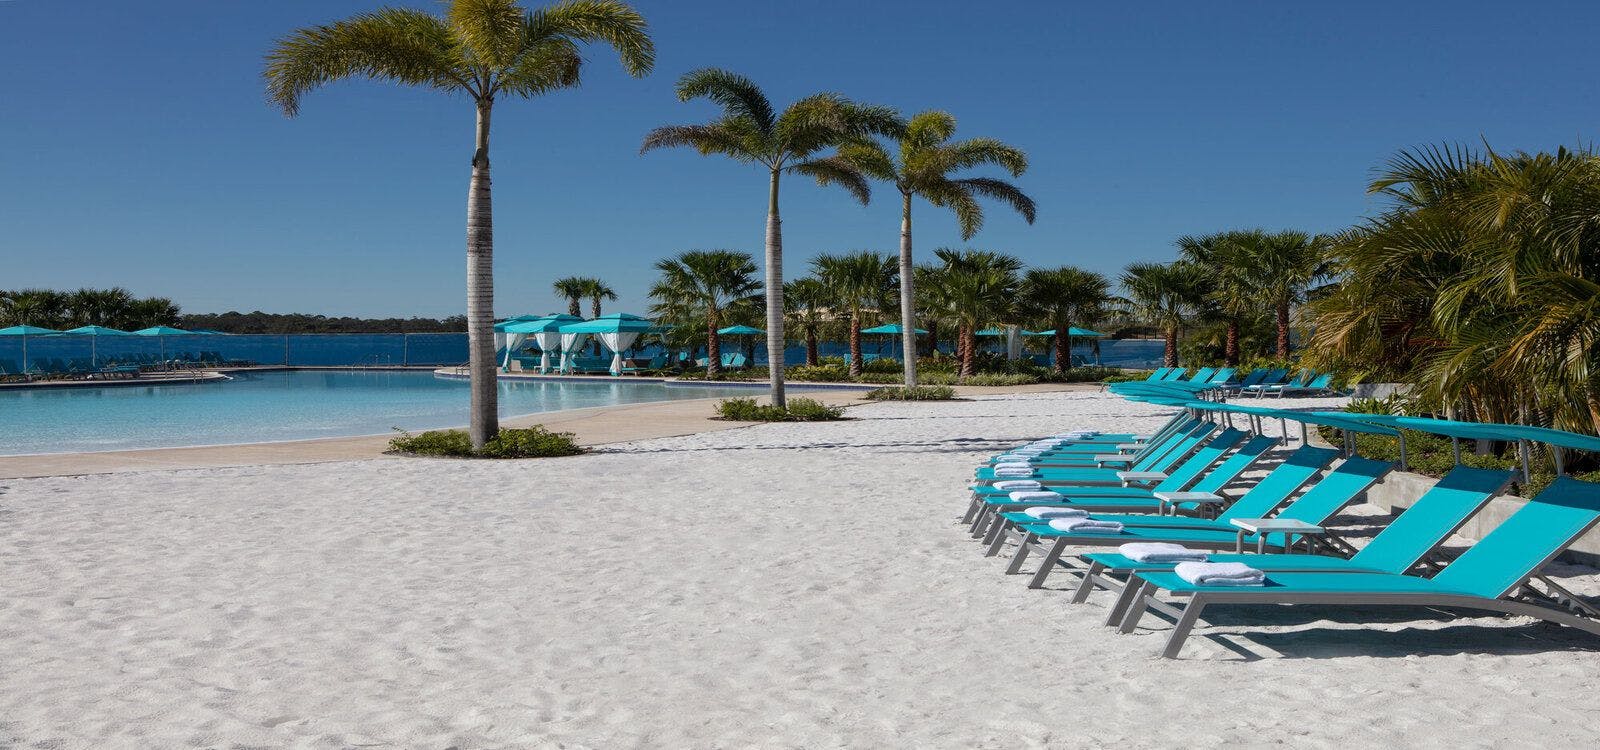 Orlando beach houses such as Margaritaville resort with beach